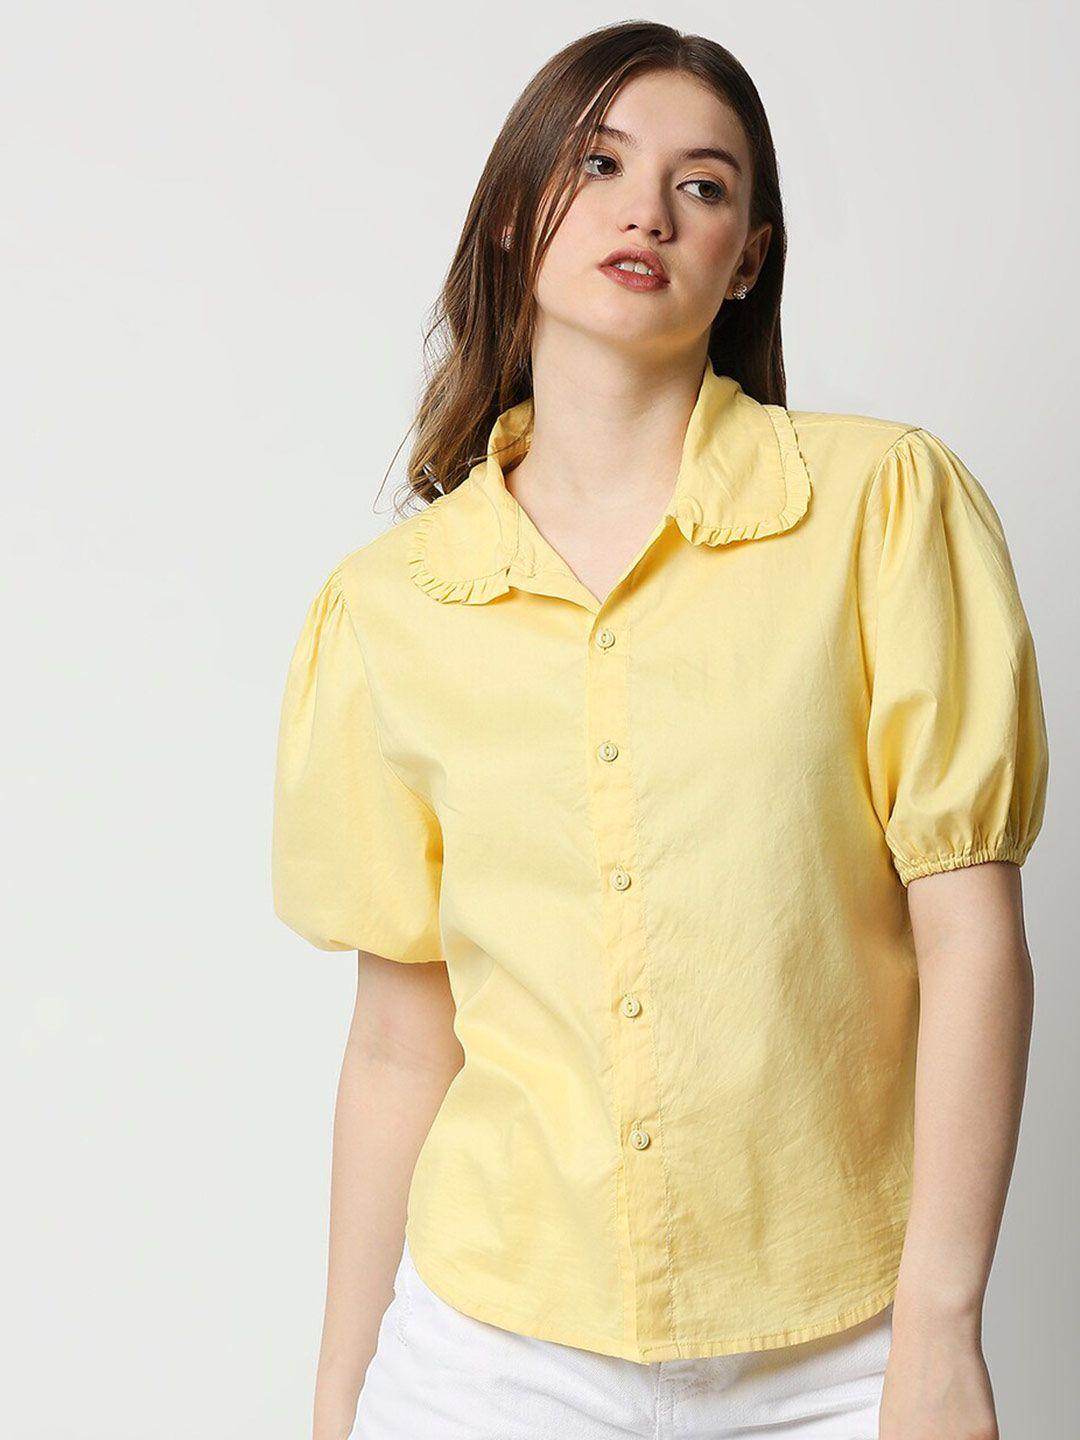 remanika yellow & goldfinch shirt style top